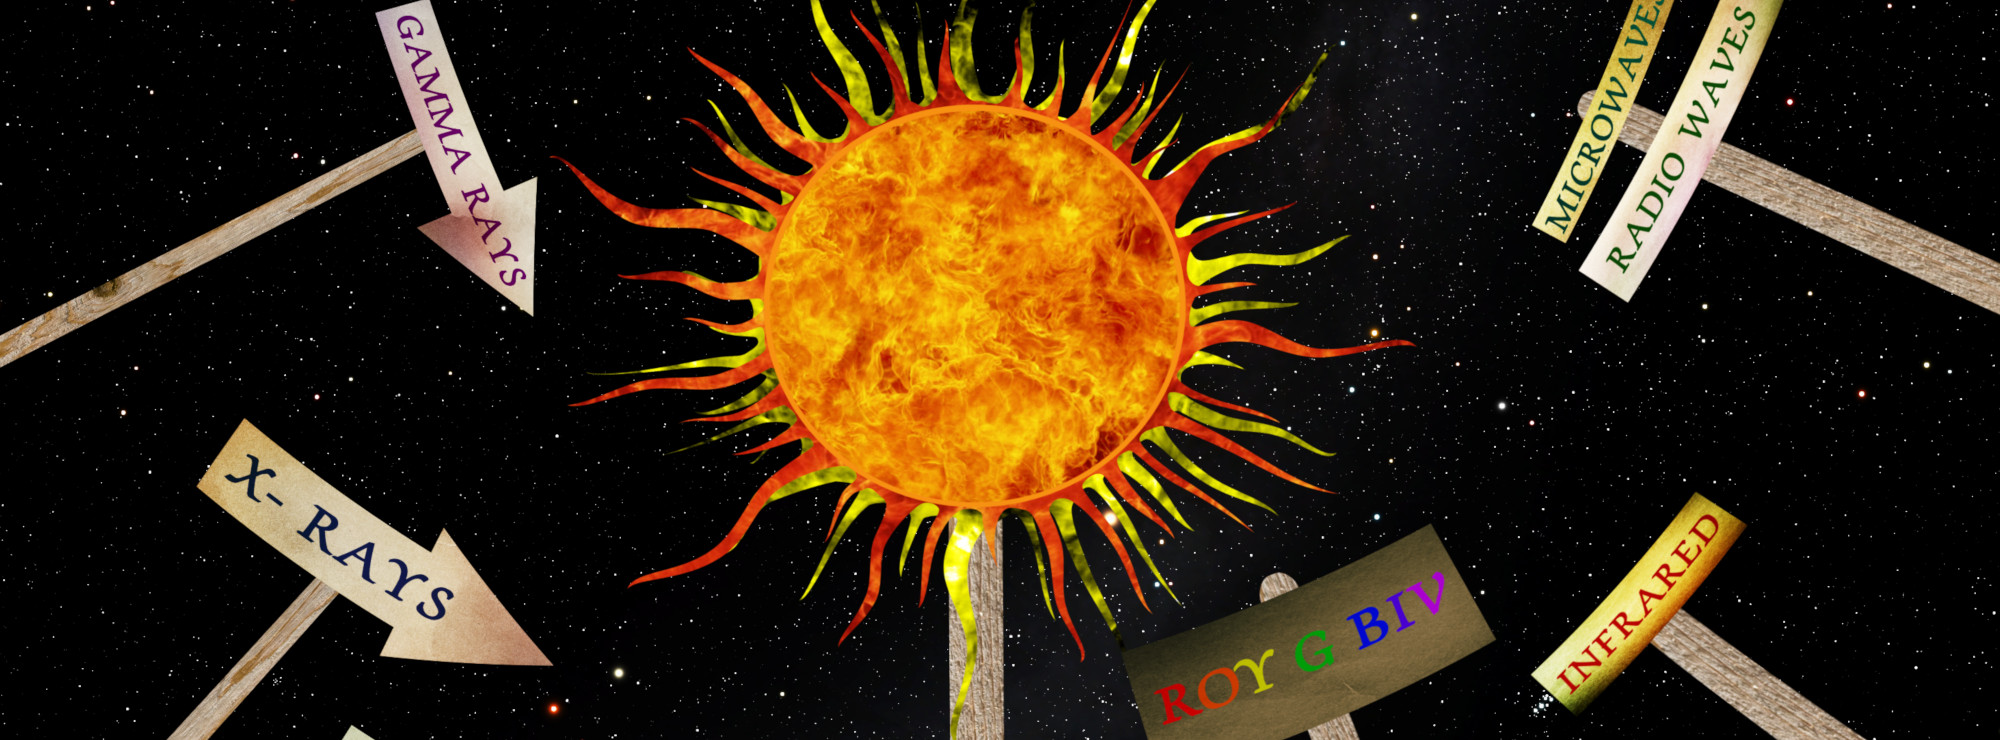 Sunstruck!.  Credit Michigan Science Center.